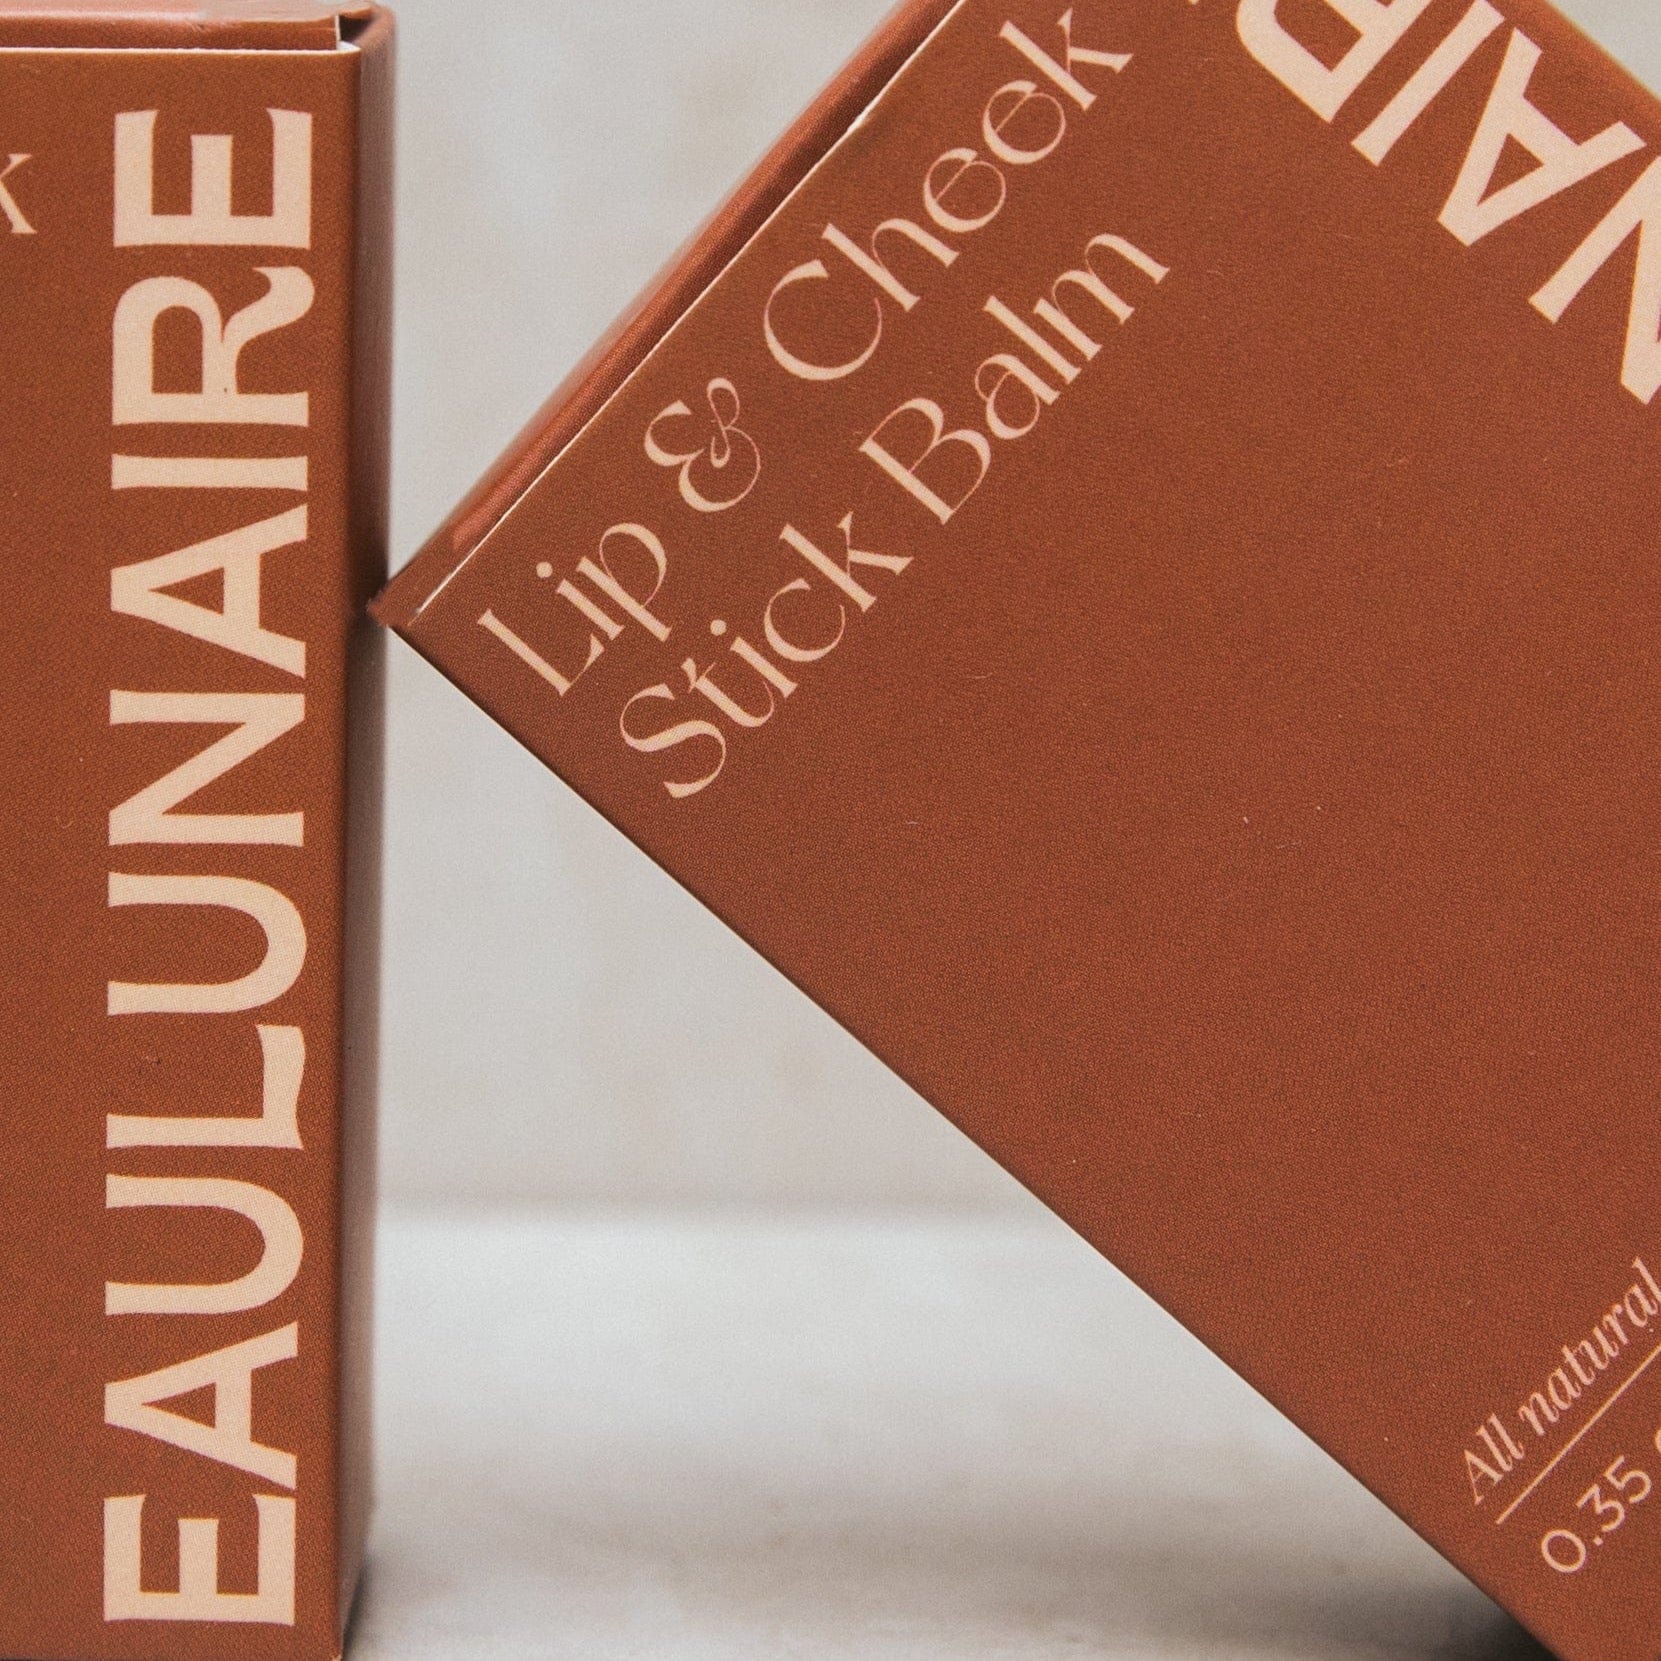 Terra Lip and Cheek Stick Balm - Brown by EAULUNAIRE